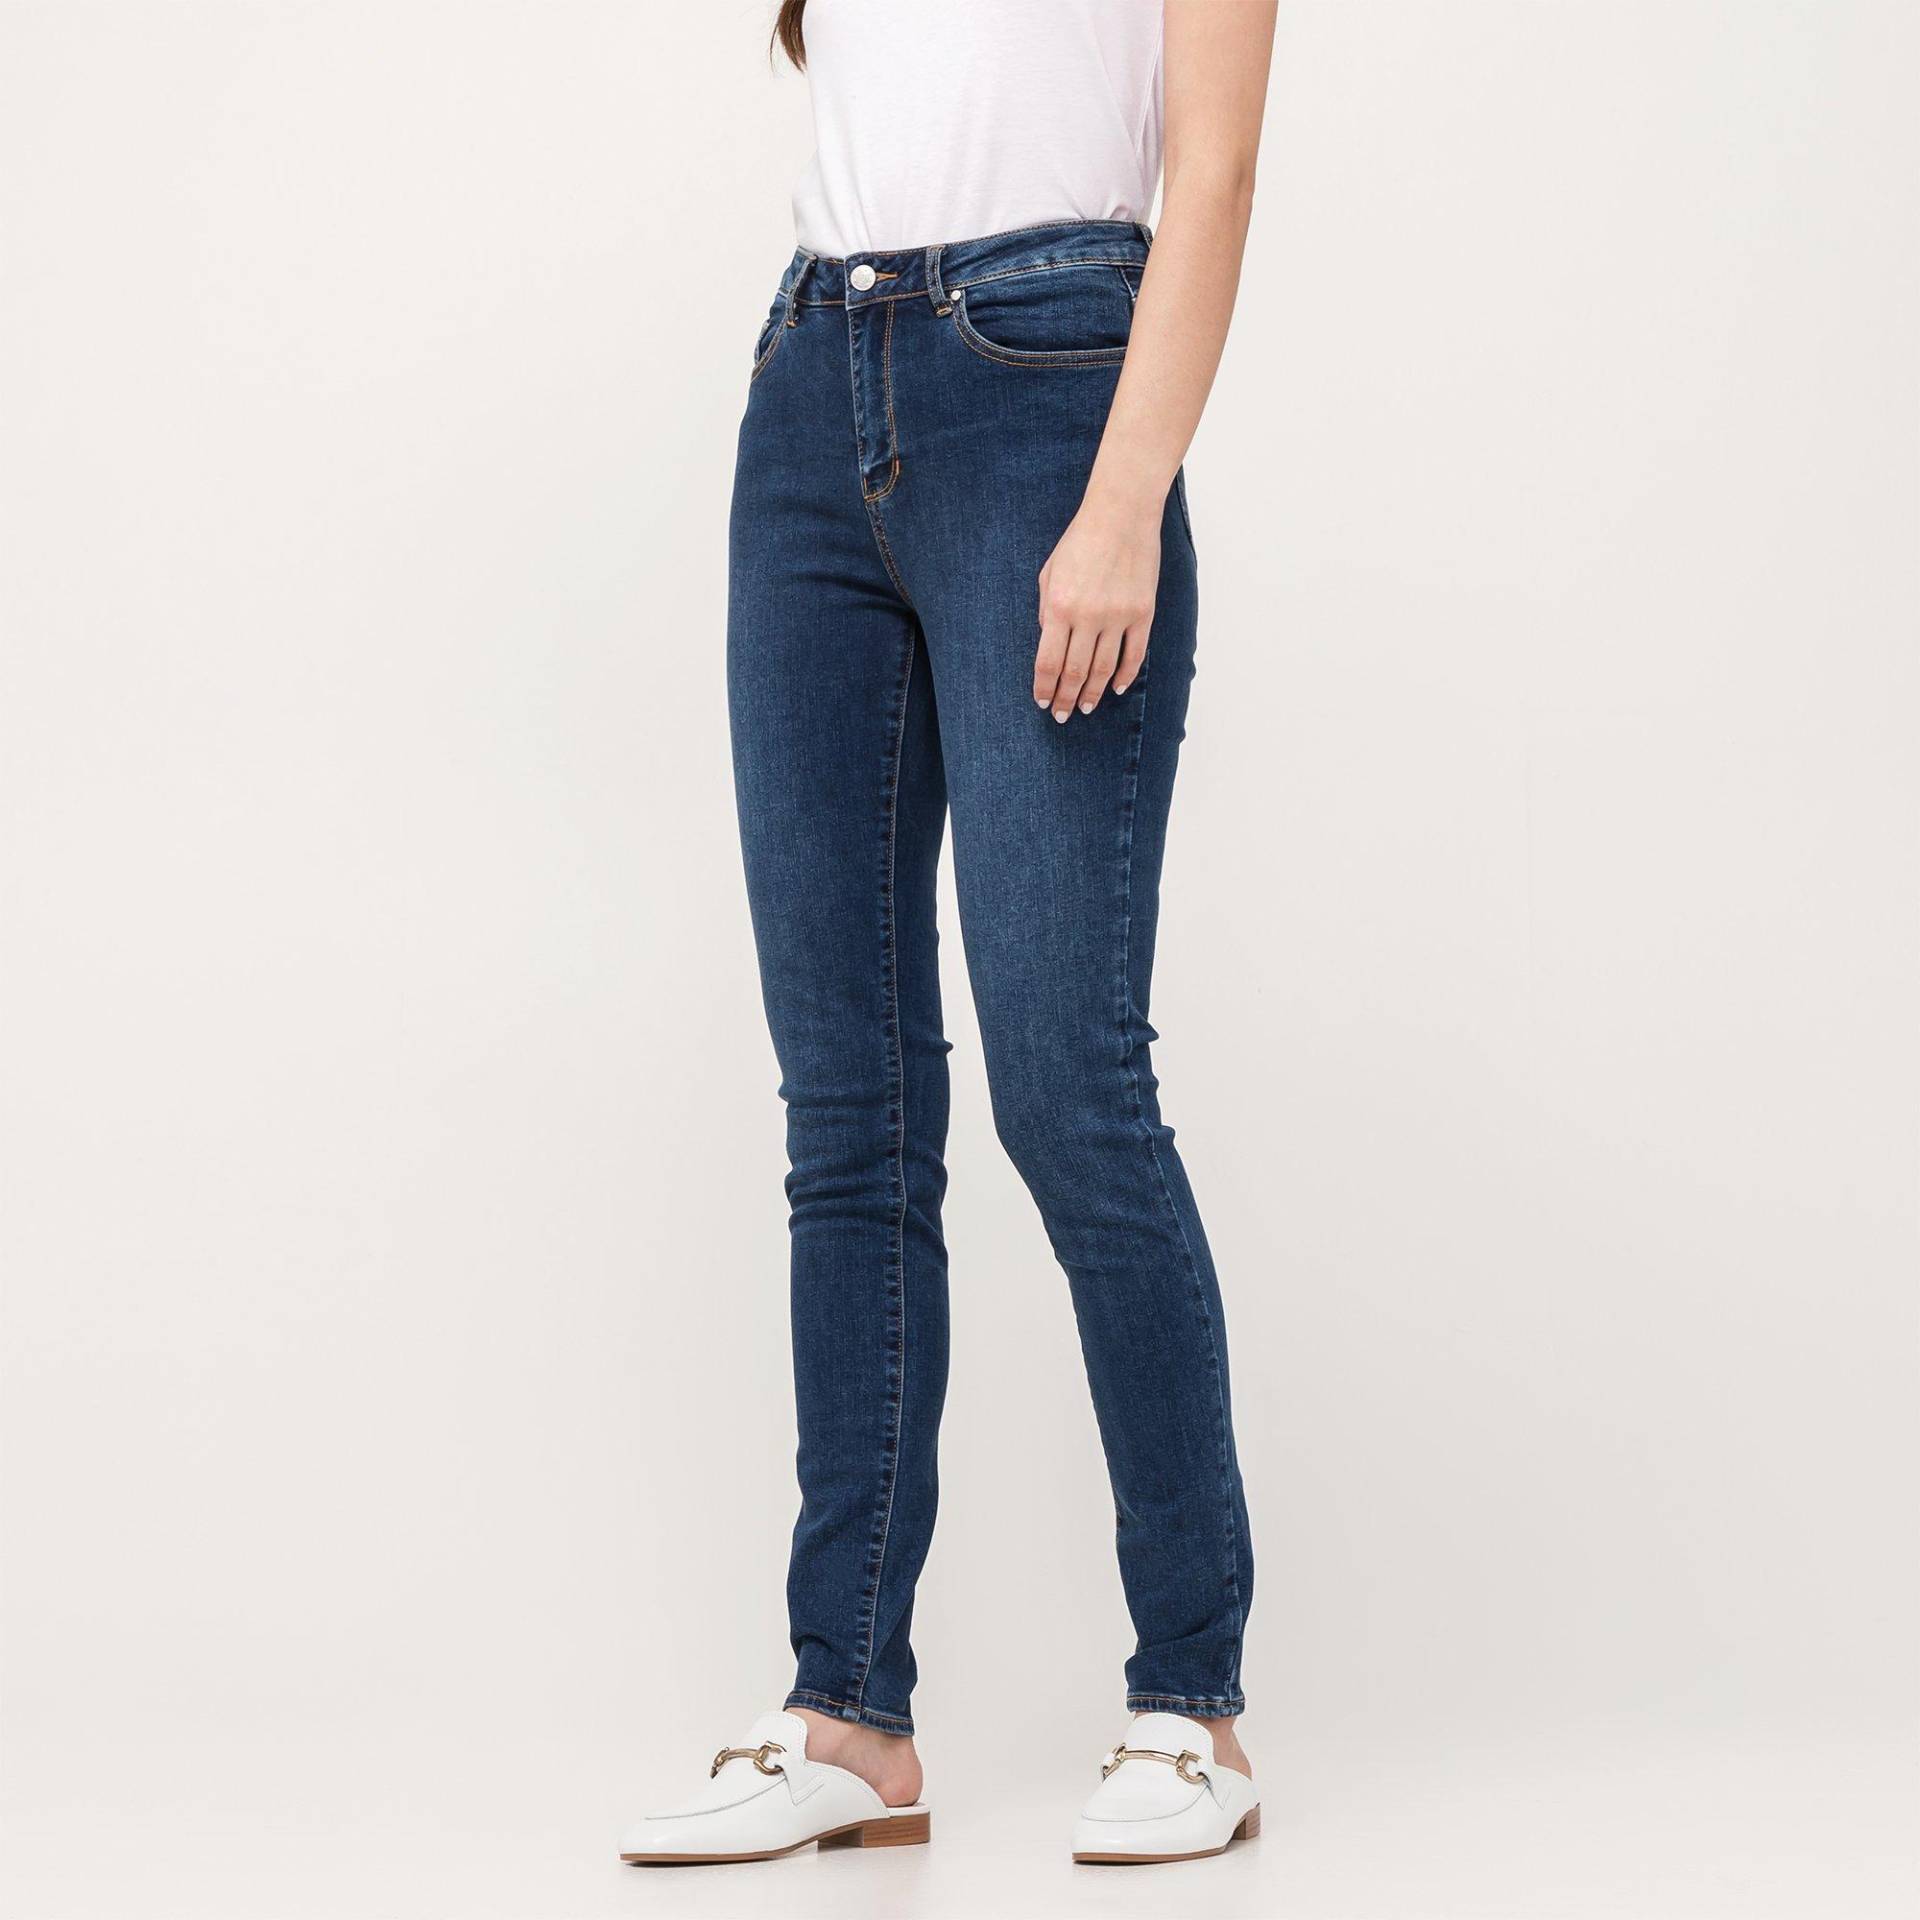 Jeans, Slim Fit Damen Blau Denim L30/W34 von Manor Woman